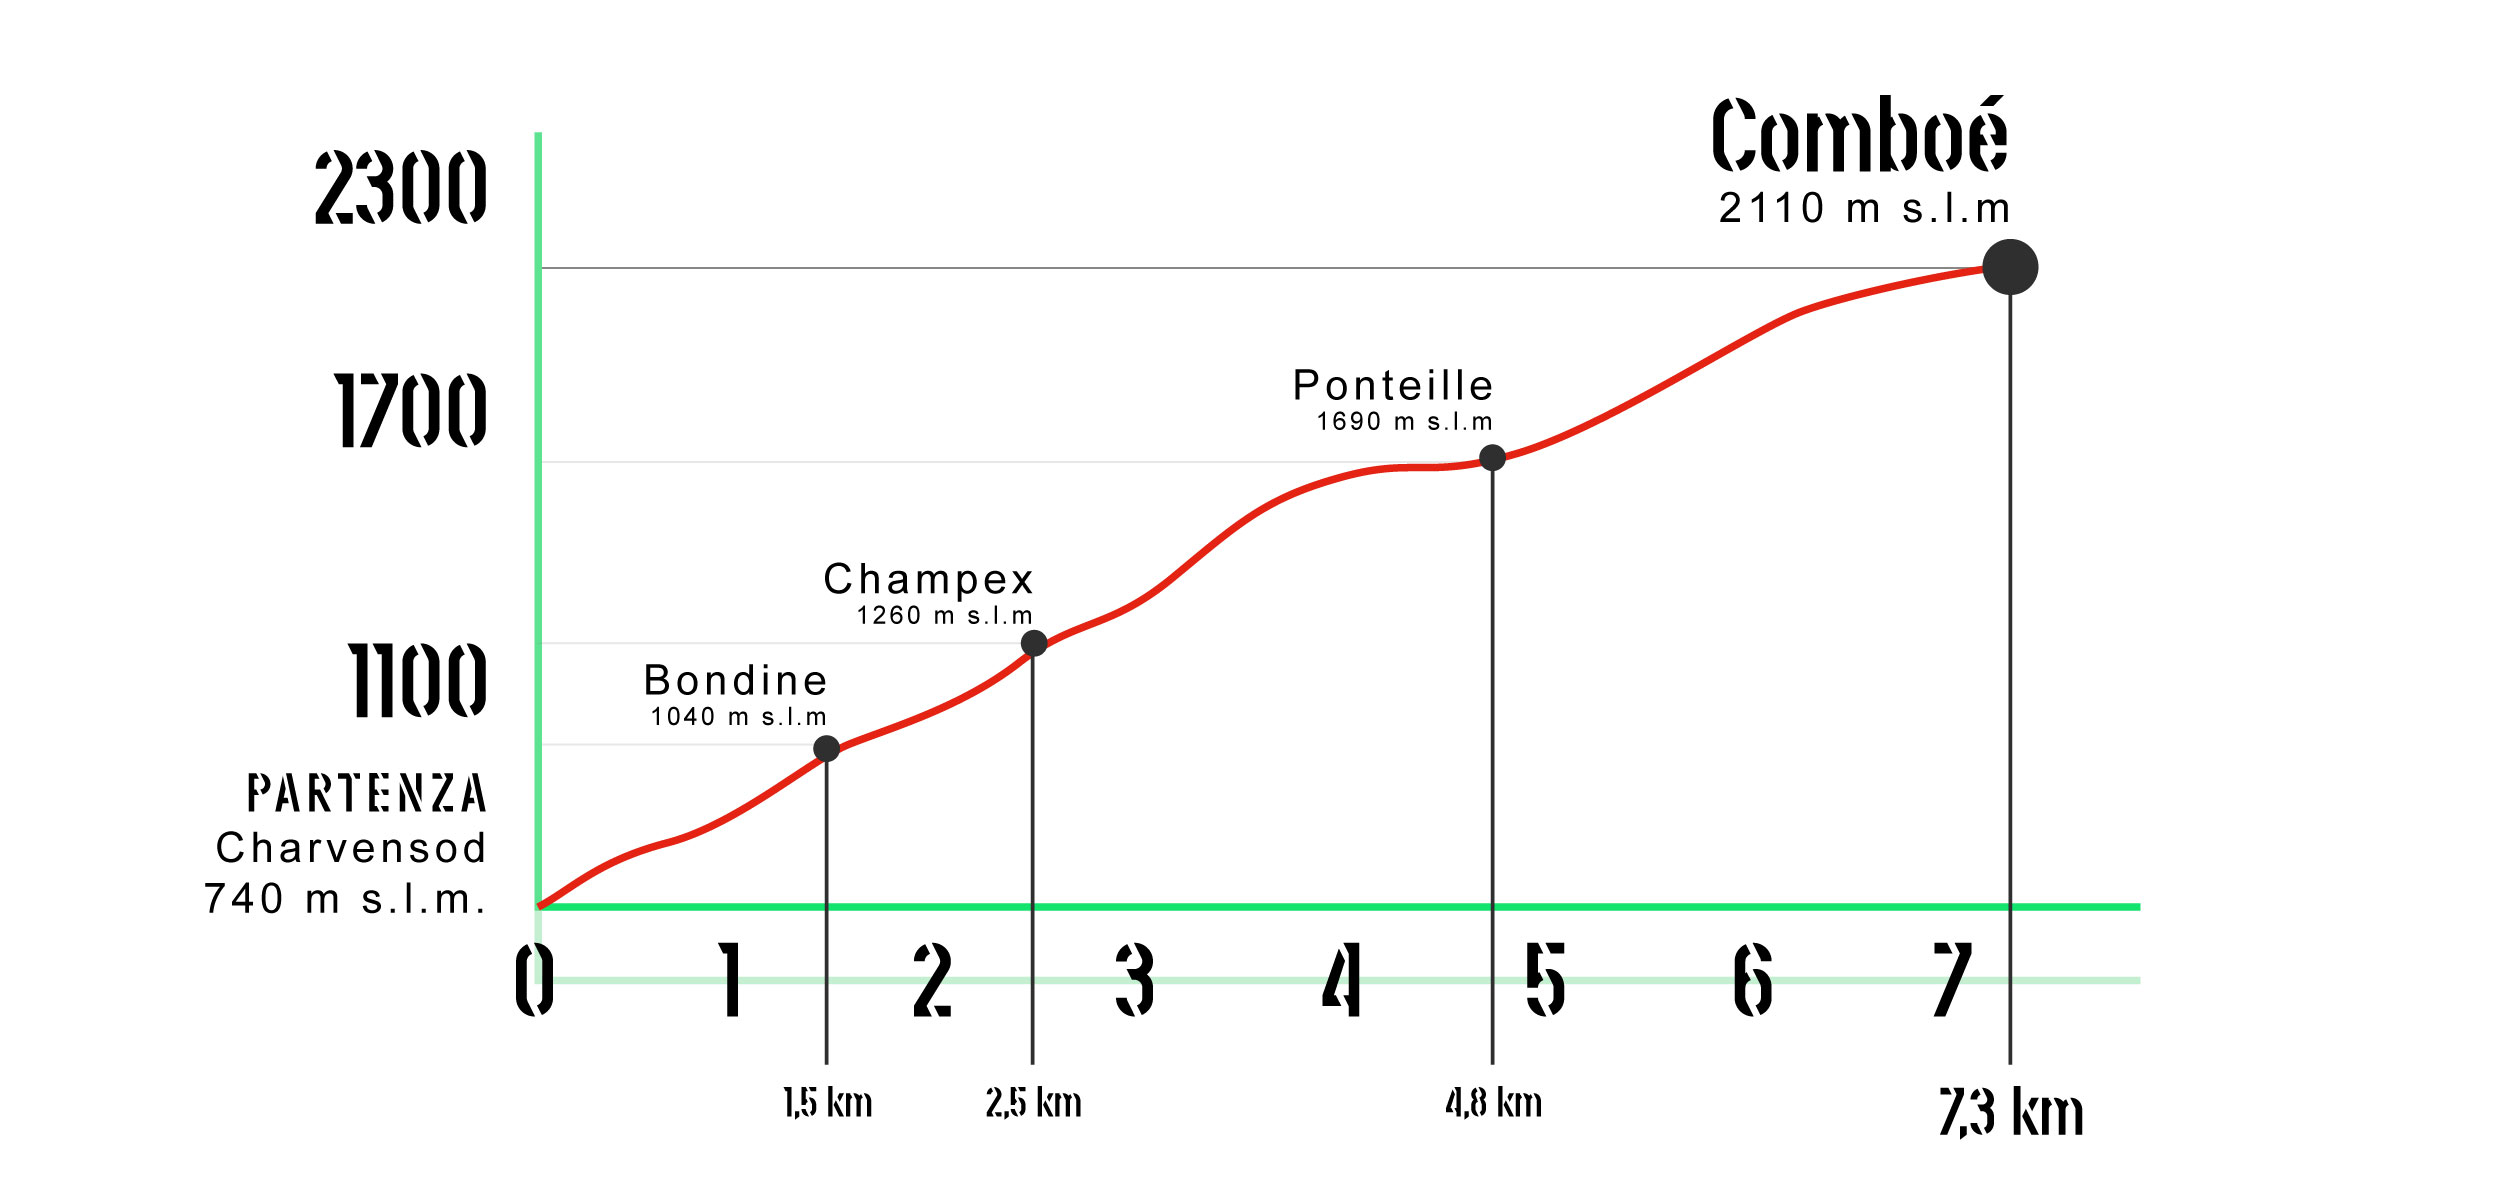 Profilo altimetrico Aosta - Comboé